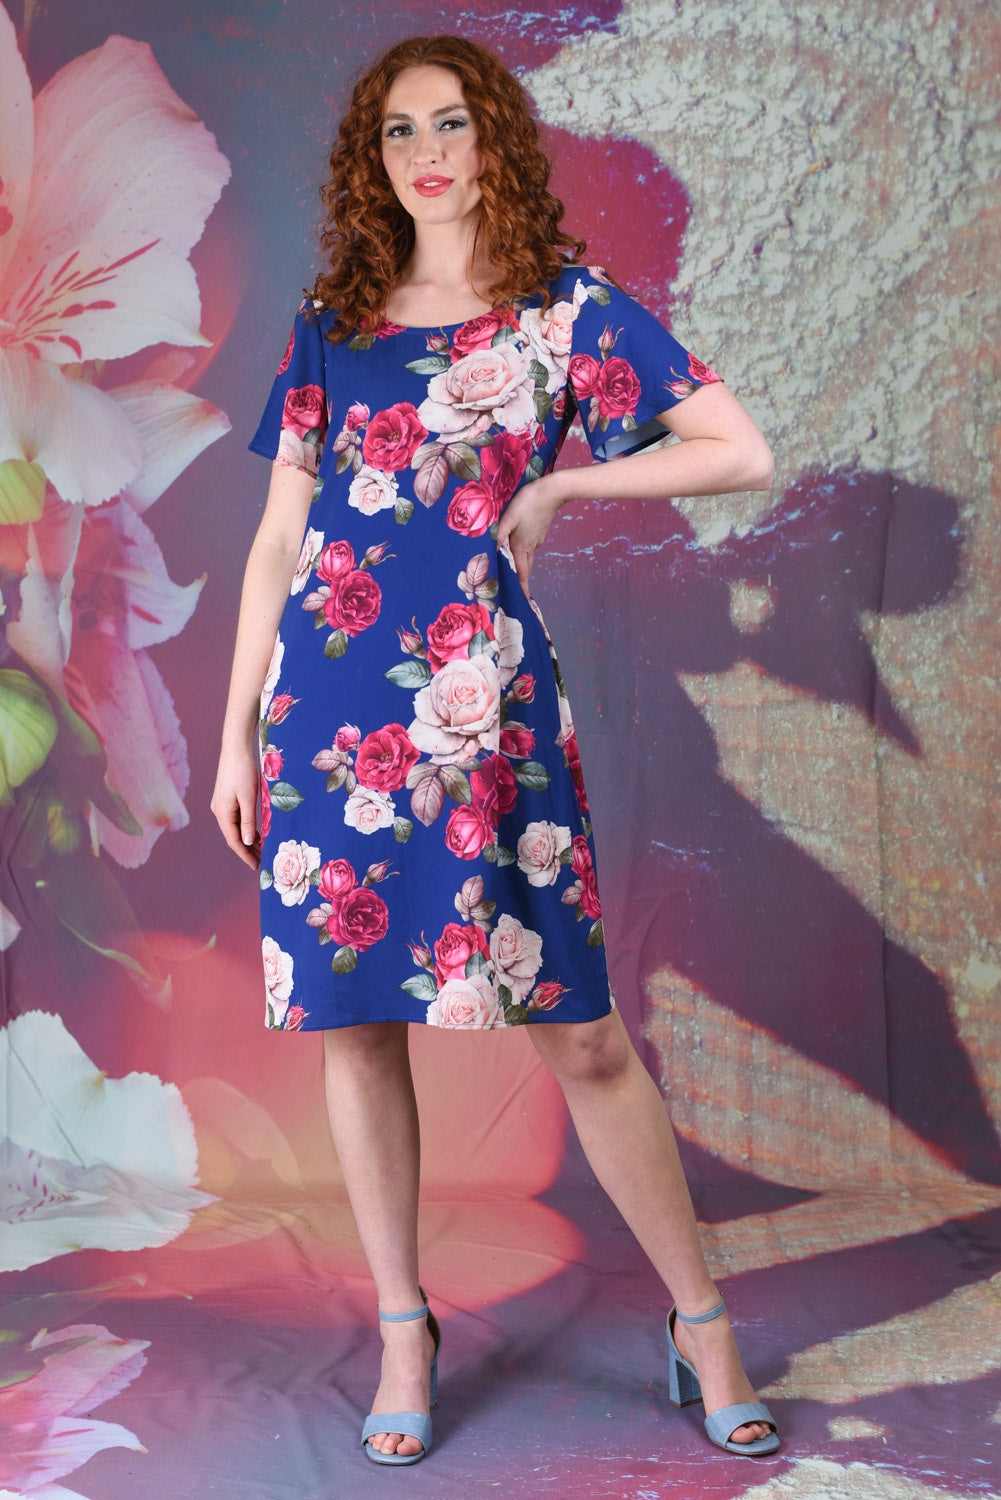 Model wearing Austin Millie Dress, Roses by Annah Stretton